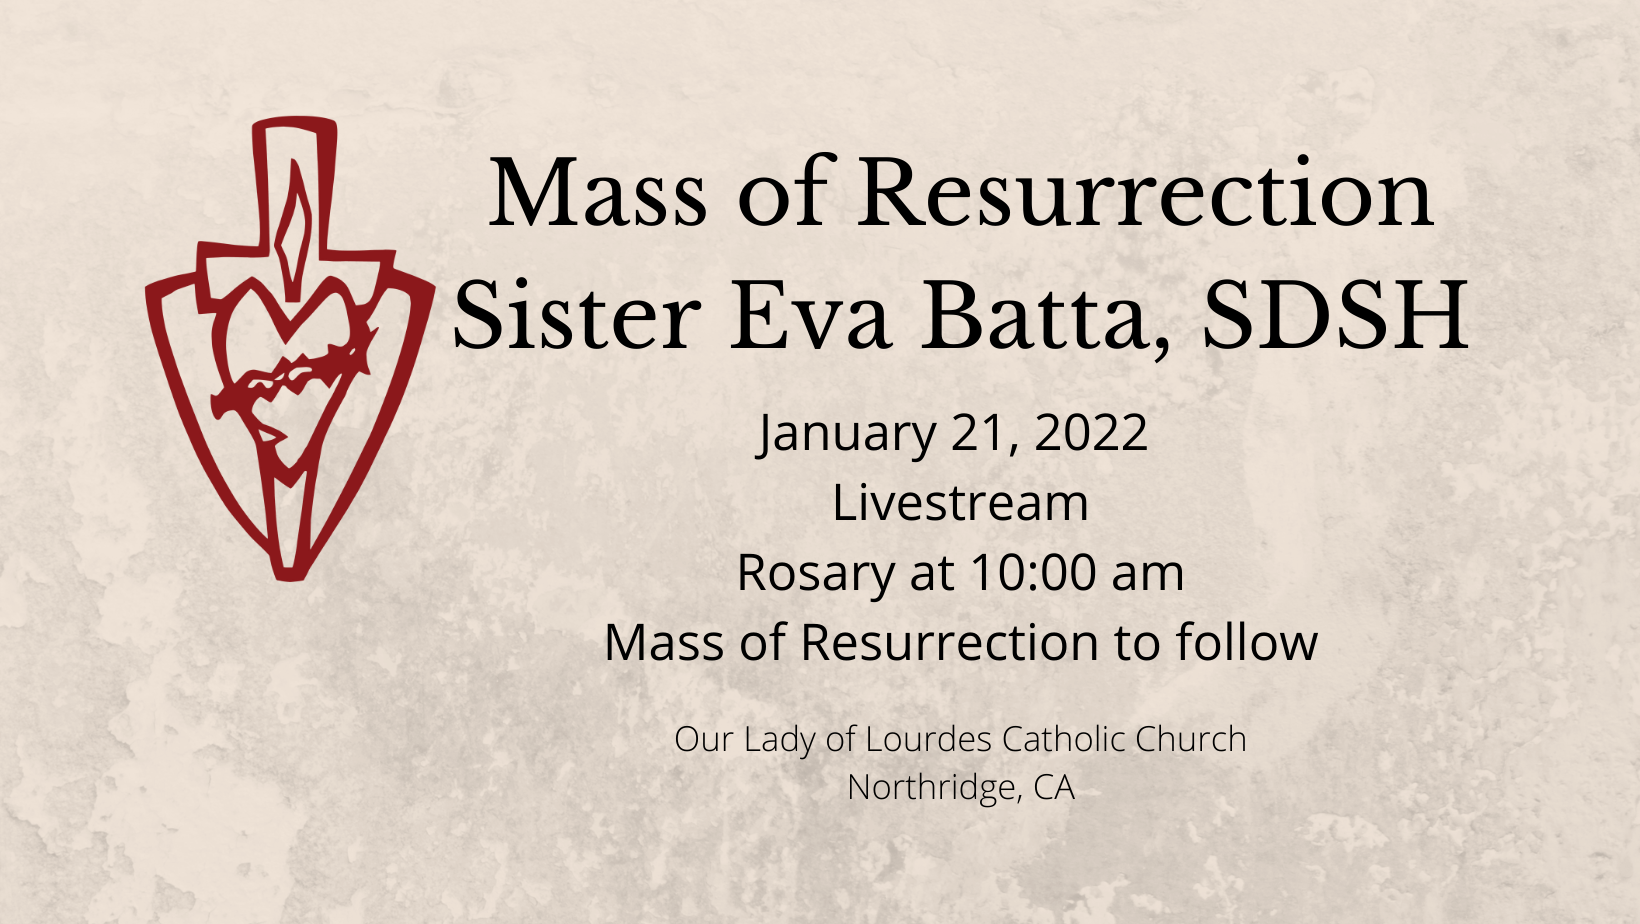 https://sacredheartsisters.com/wp-content/uploads/2022/01/Mass-of-Resurrection-Sister-Eva-Batta-SDSH-1.png